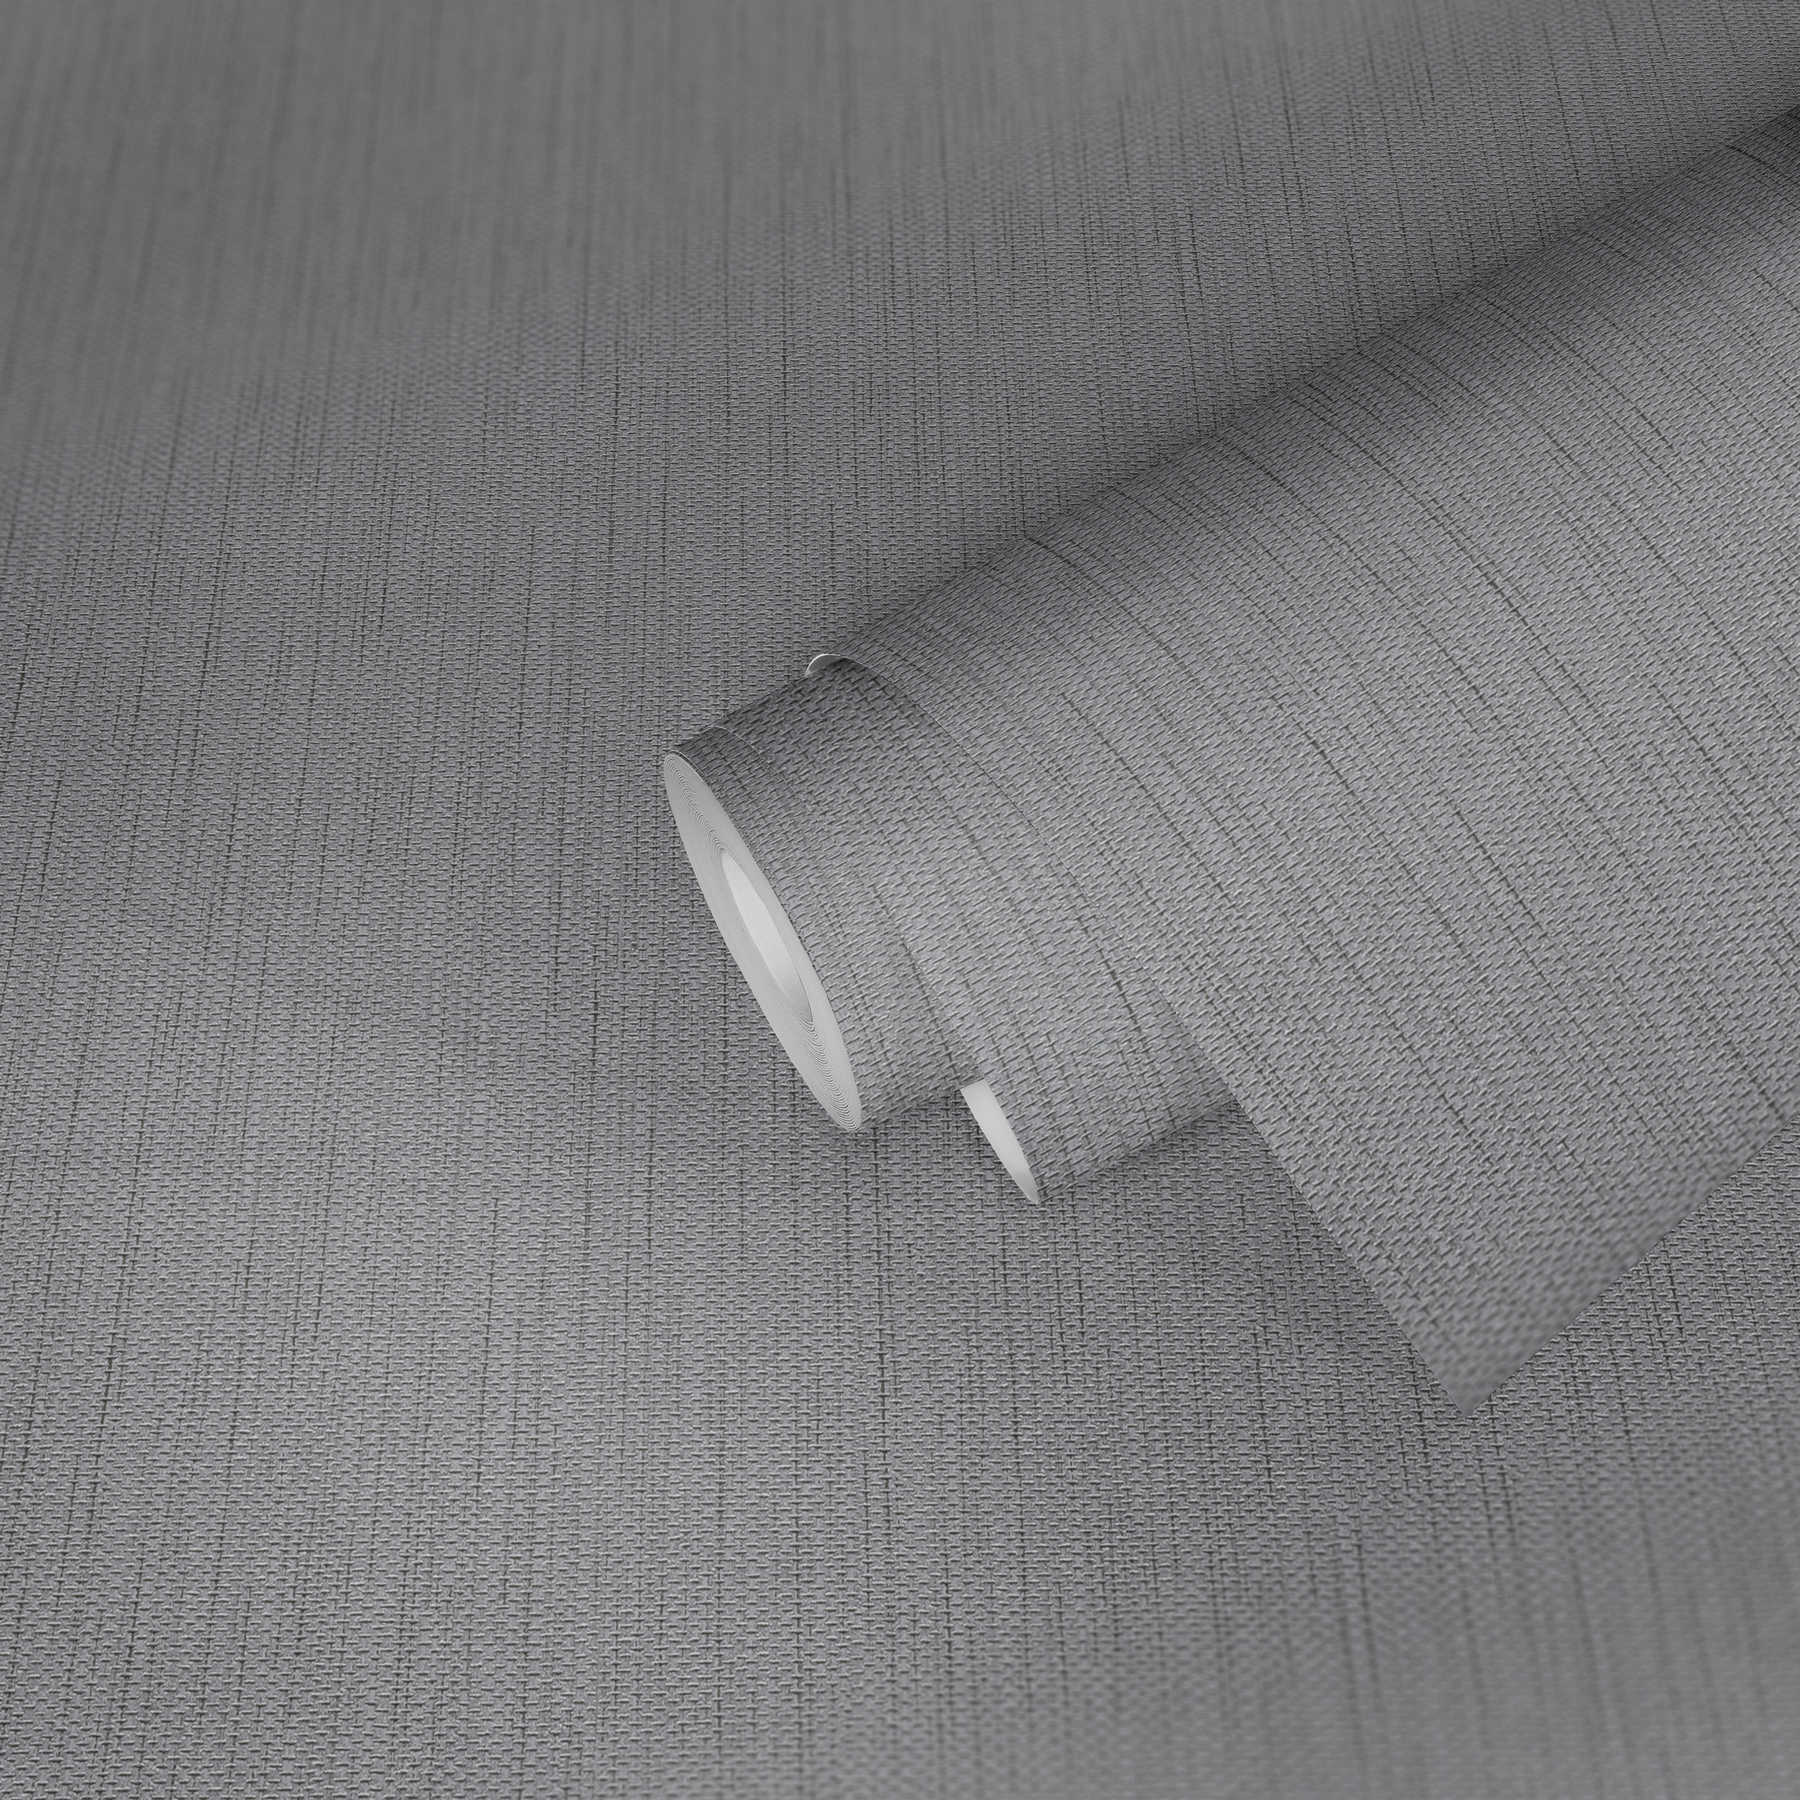             Vliestapete Textiloptik mit Leinen-Struktur – Grau
        